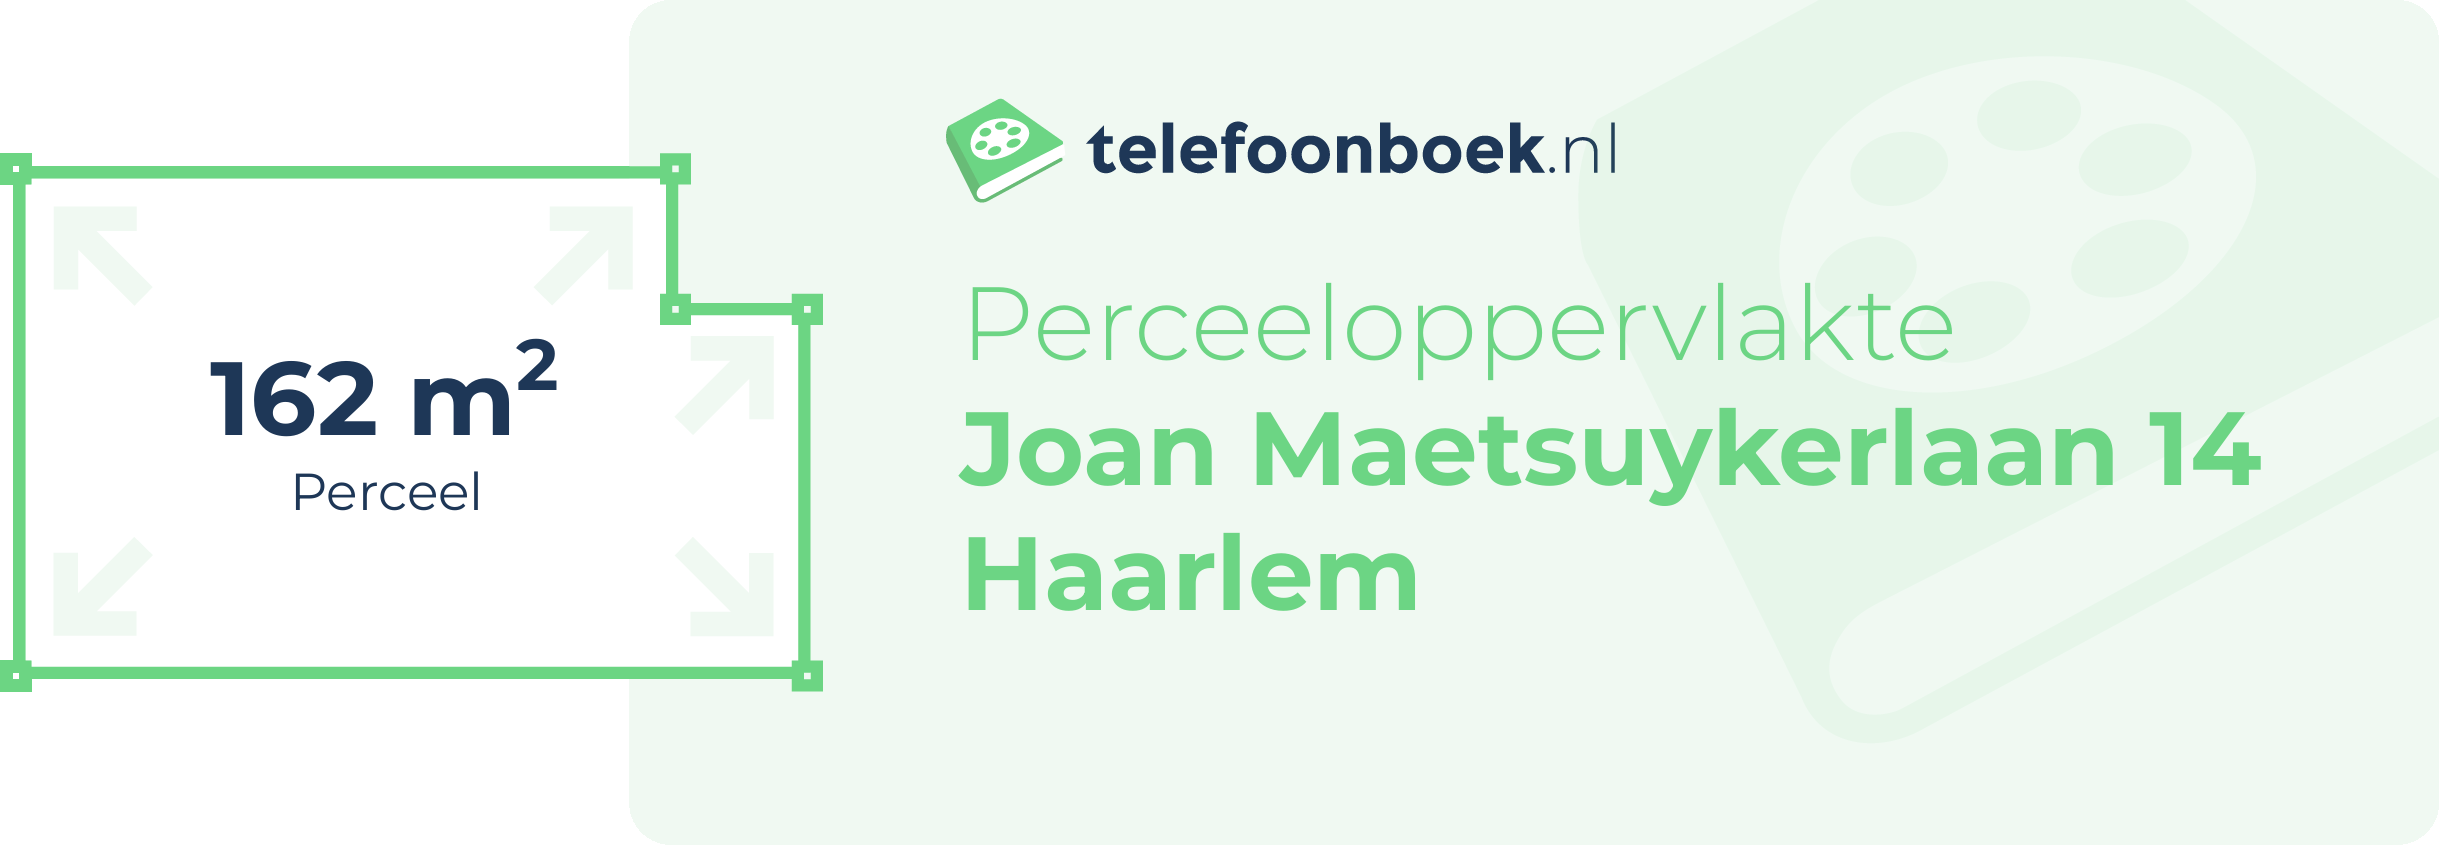 Perceeloppervlakte Joan Maetsuykerlaan 14 Haarlem